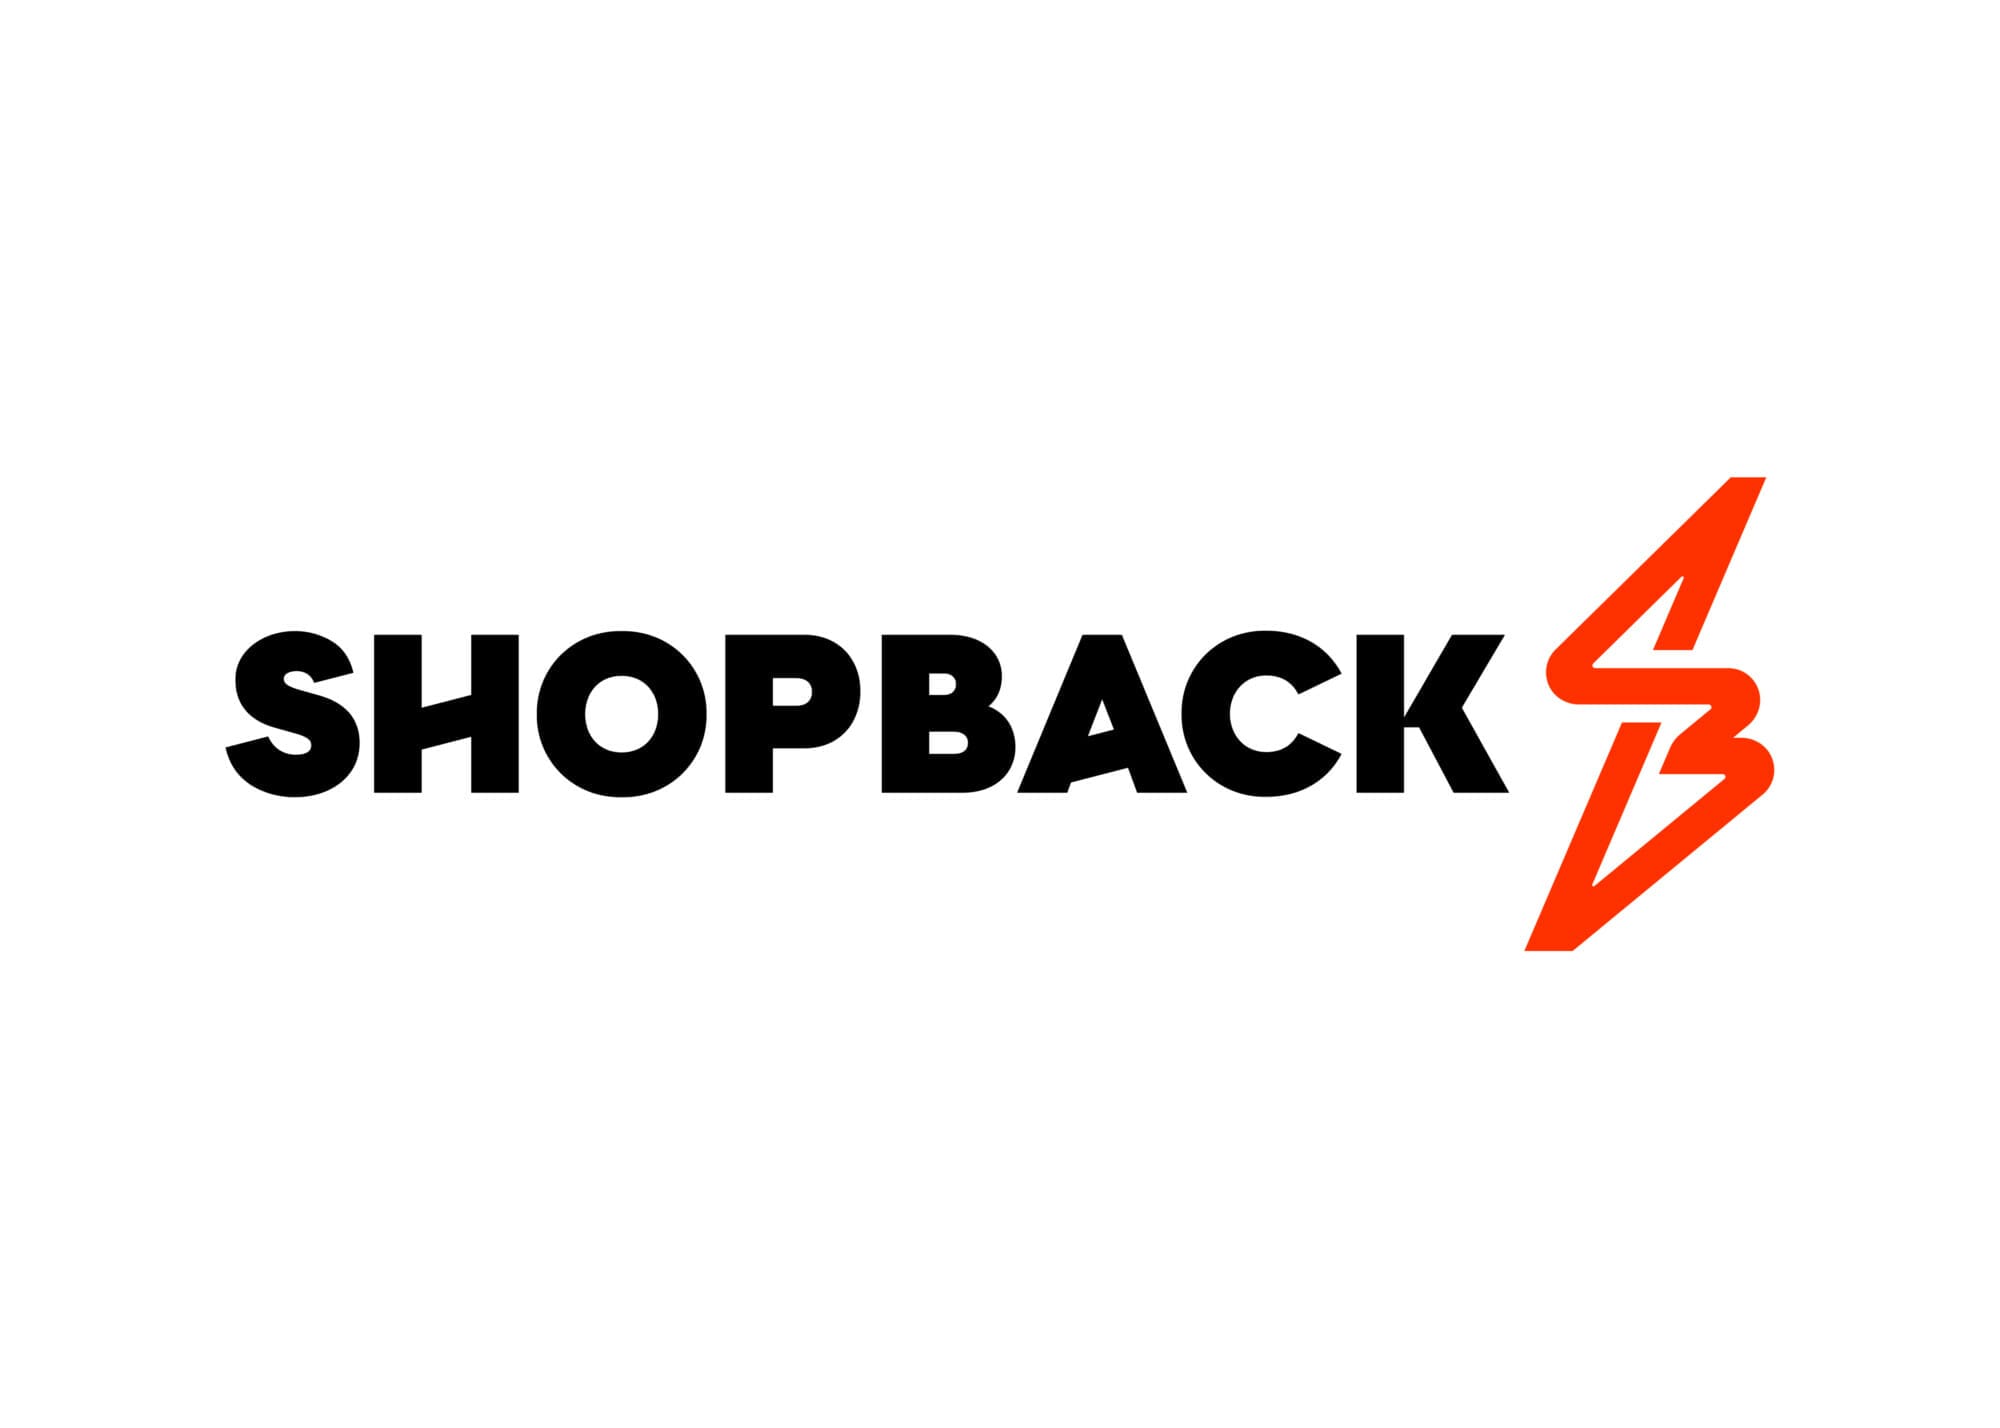 ShopBack ฉลองครบรอบ 5 ปี พร้อมรีเฟรชแบรนด์ใหม่ มอบของขวัญด้วย Cash back สูงสุดถึง 90%